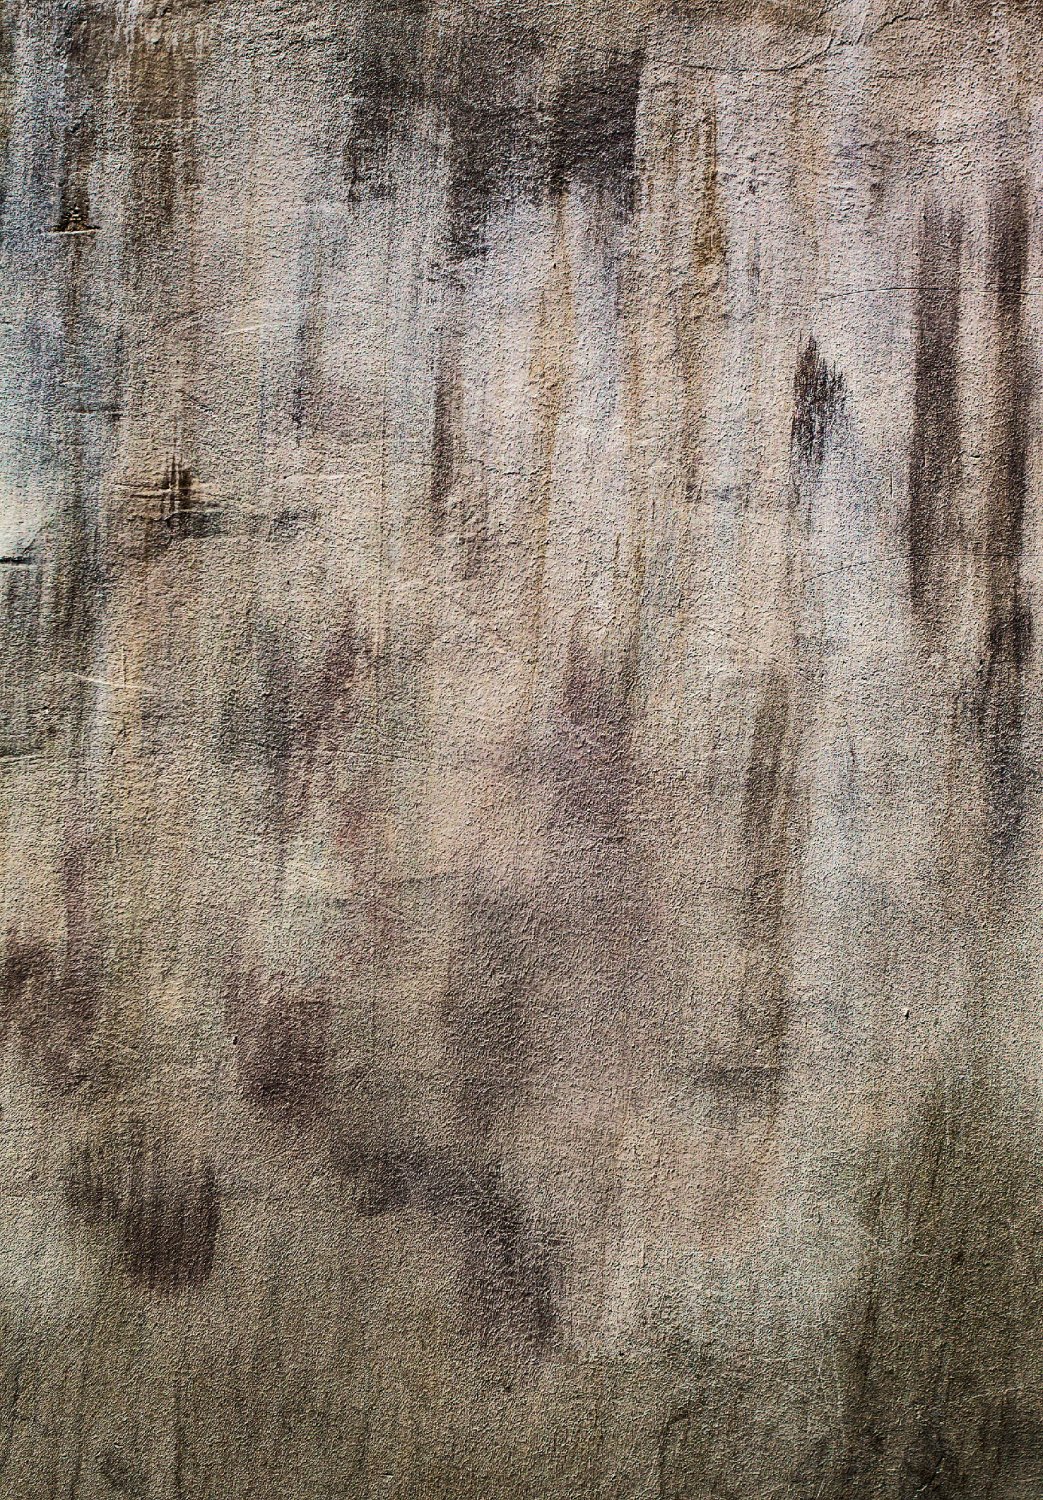 Wilton-teppe - Polia (grå/brun)